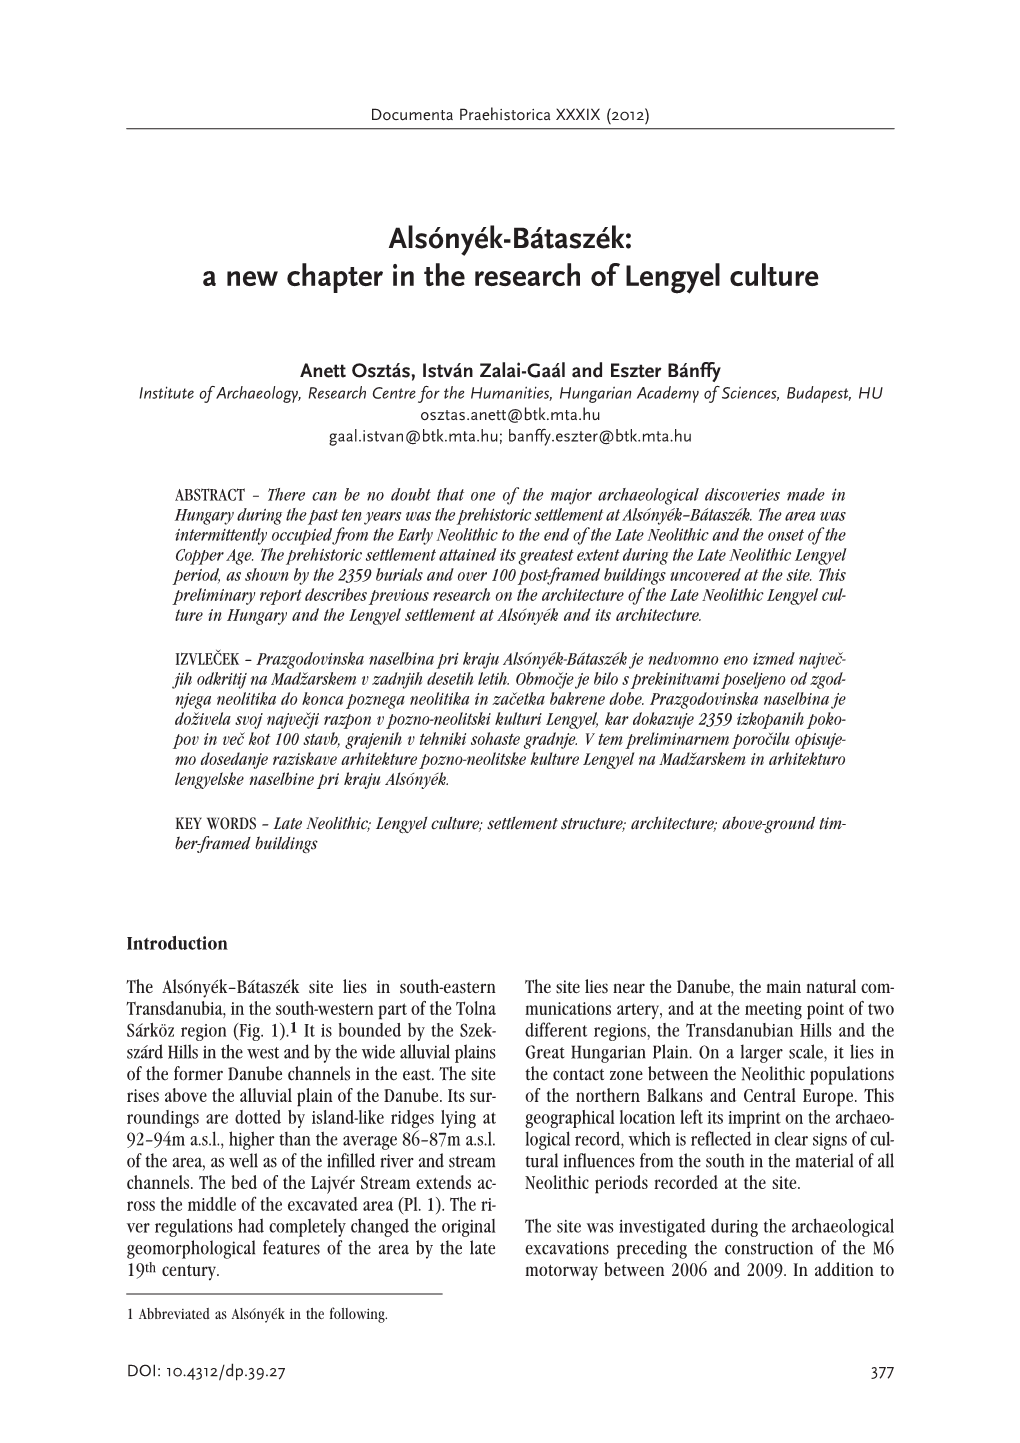 Alsónyék-Bátaszék&gt; a New Chapter in the Research of Lengyel Culture